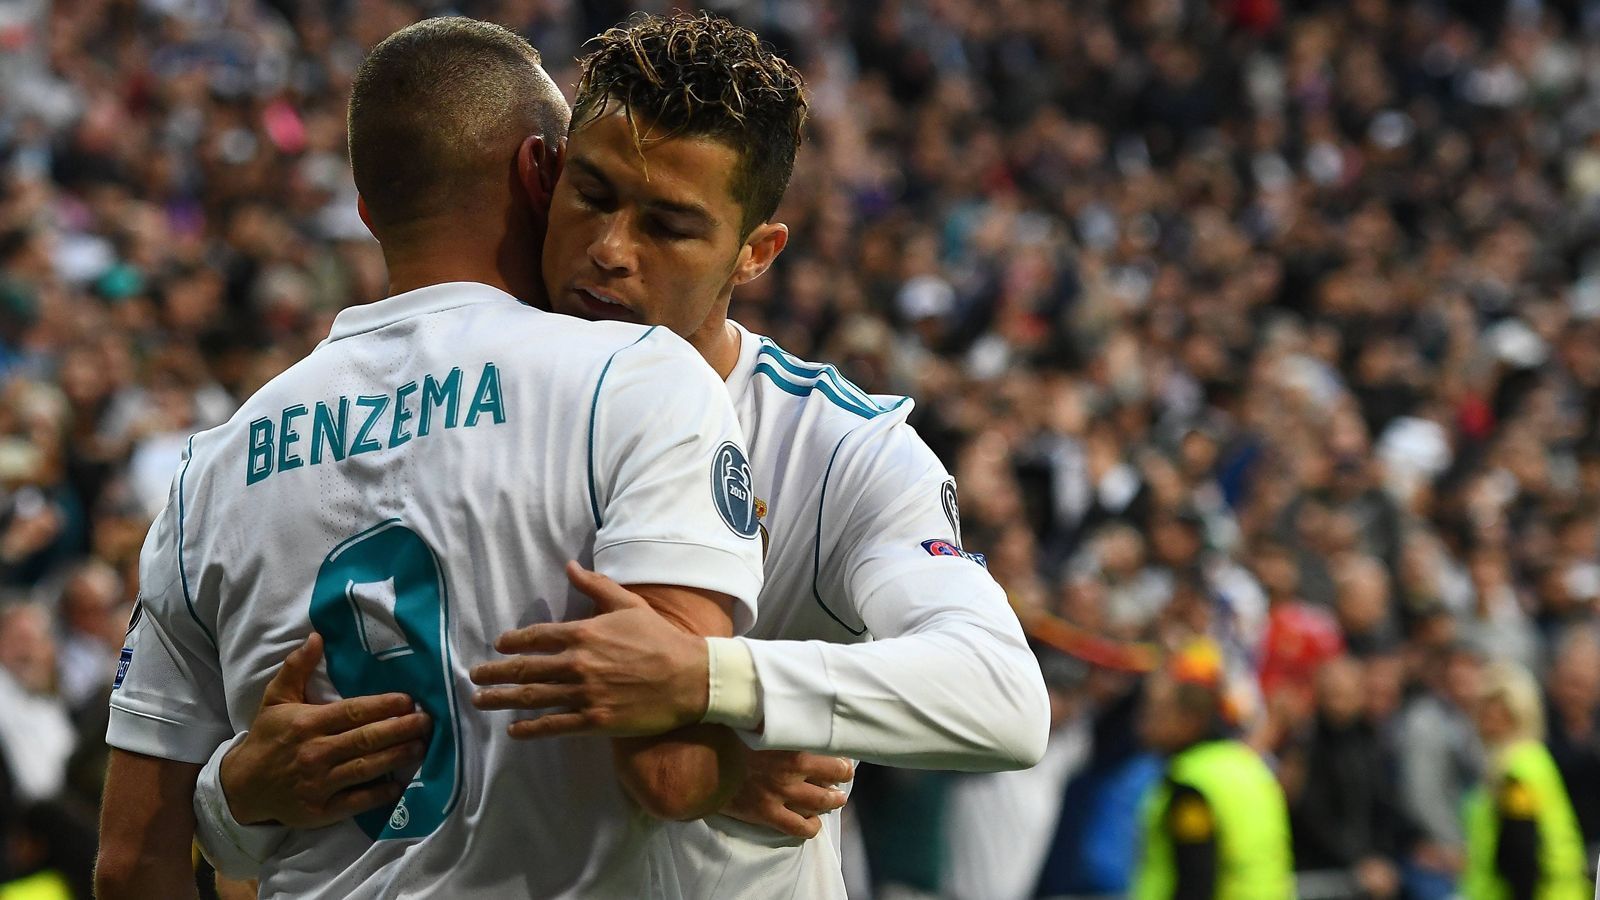 
                <strong>Cristiano Ronaldo und Karim Benzema (Real Madrid, Saison 2017/18)</strong><br>
                Tore gesamt: 20 (Cristiano Ronaldo mit 15 Toren, Karim Benzema mit fünf Toren)
              